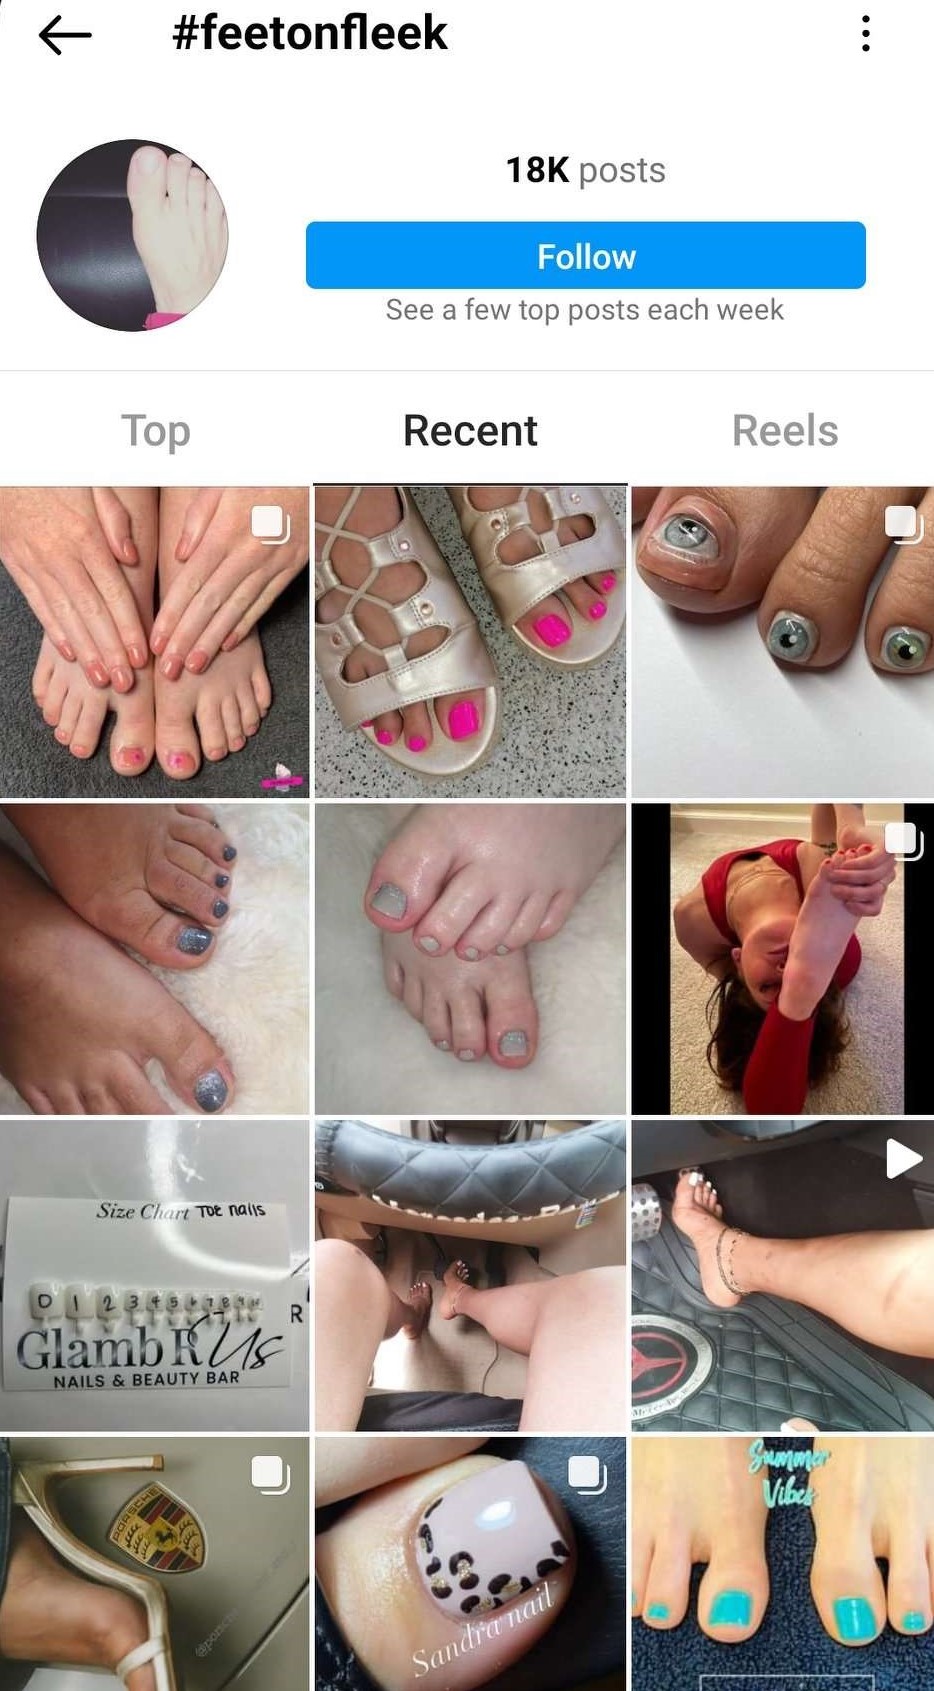 sell feet pics on instagram